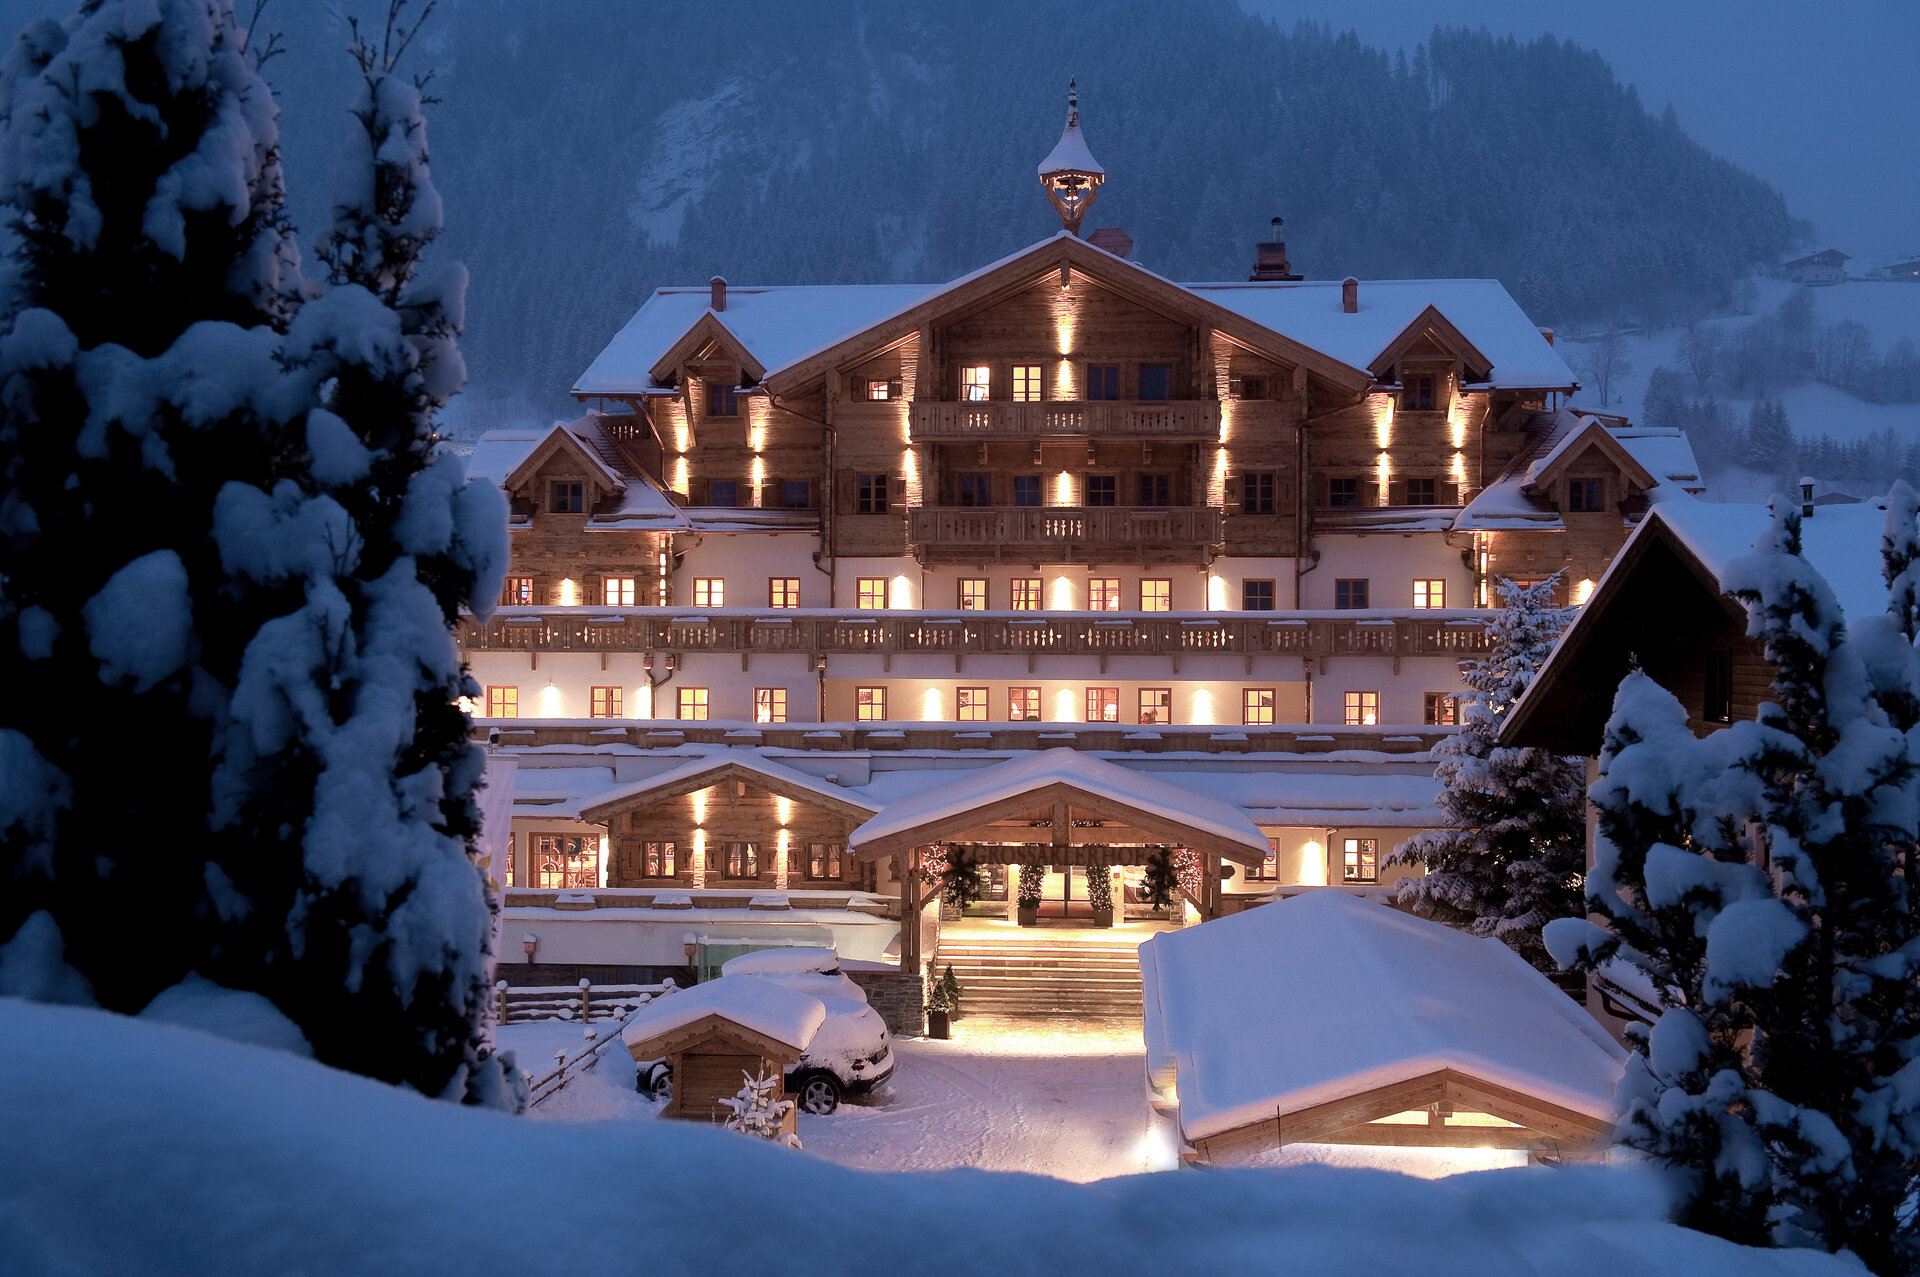 Vier Sterne Hotel Großarl im Winter | © Michael Huber I www.huber-fotografie.at